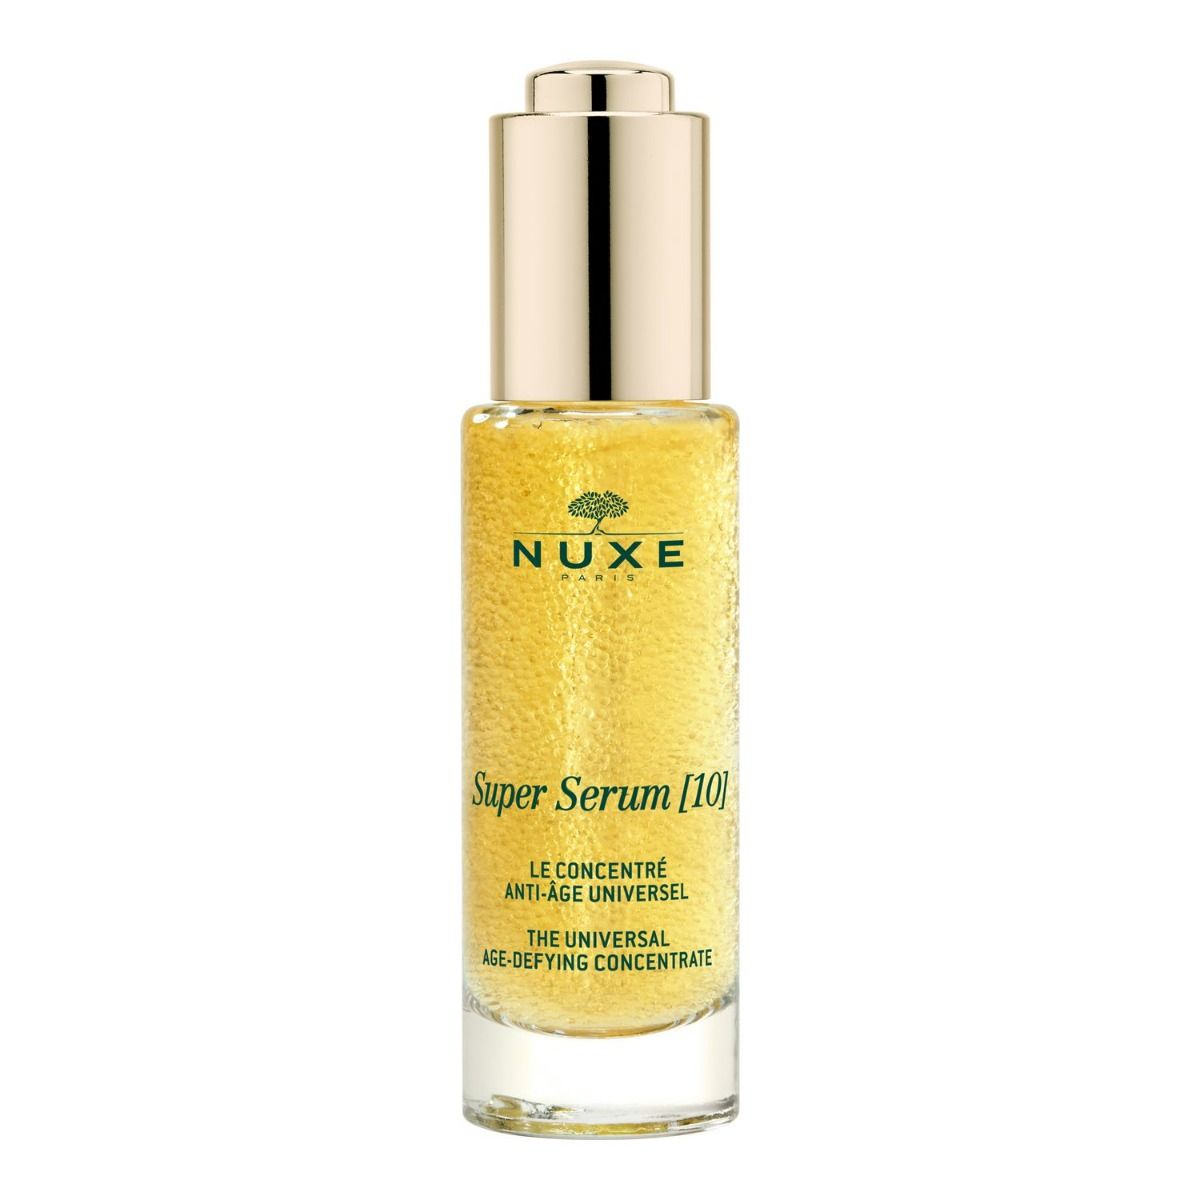 Nuxe Super Serum [10] сыворотка для лица, 30 ml цена и фото